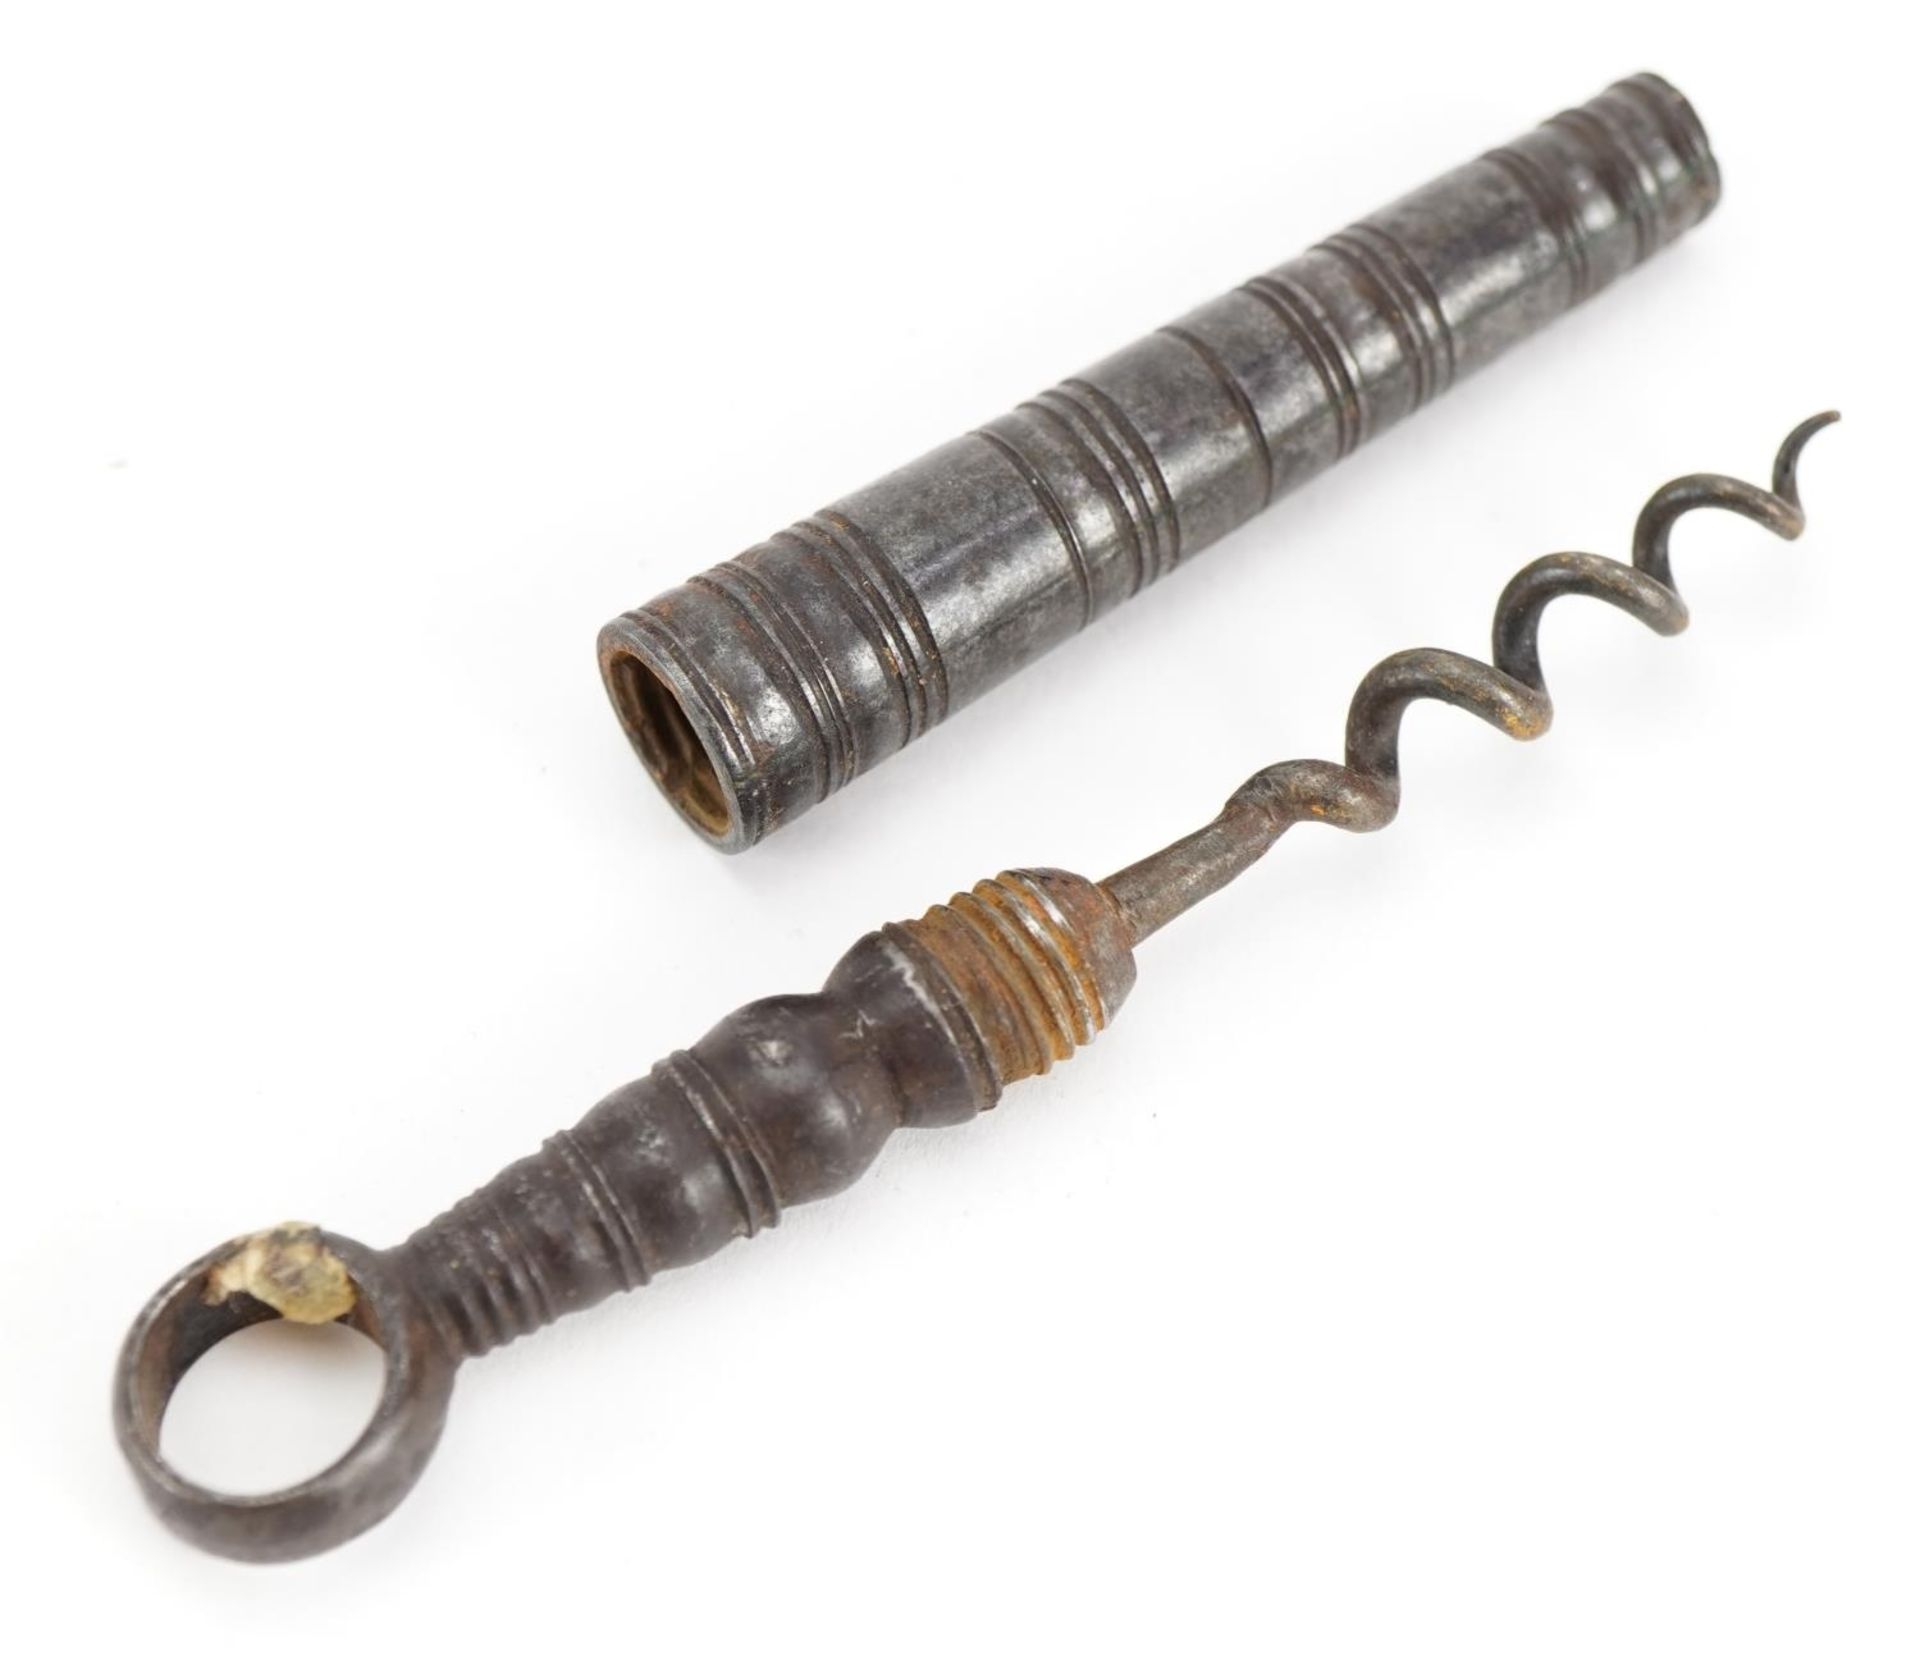 Georgian simple steel corkscrew, 10cm in length - Image 2 of 3